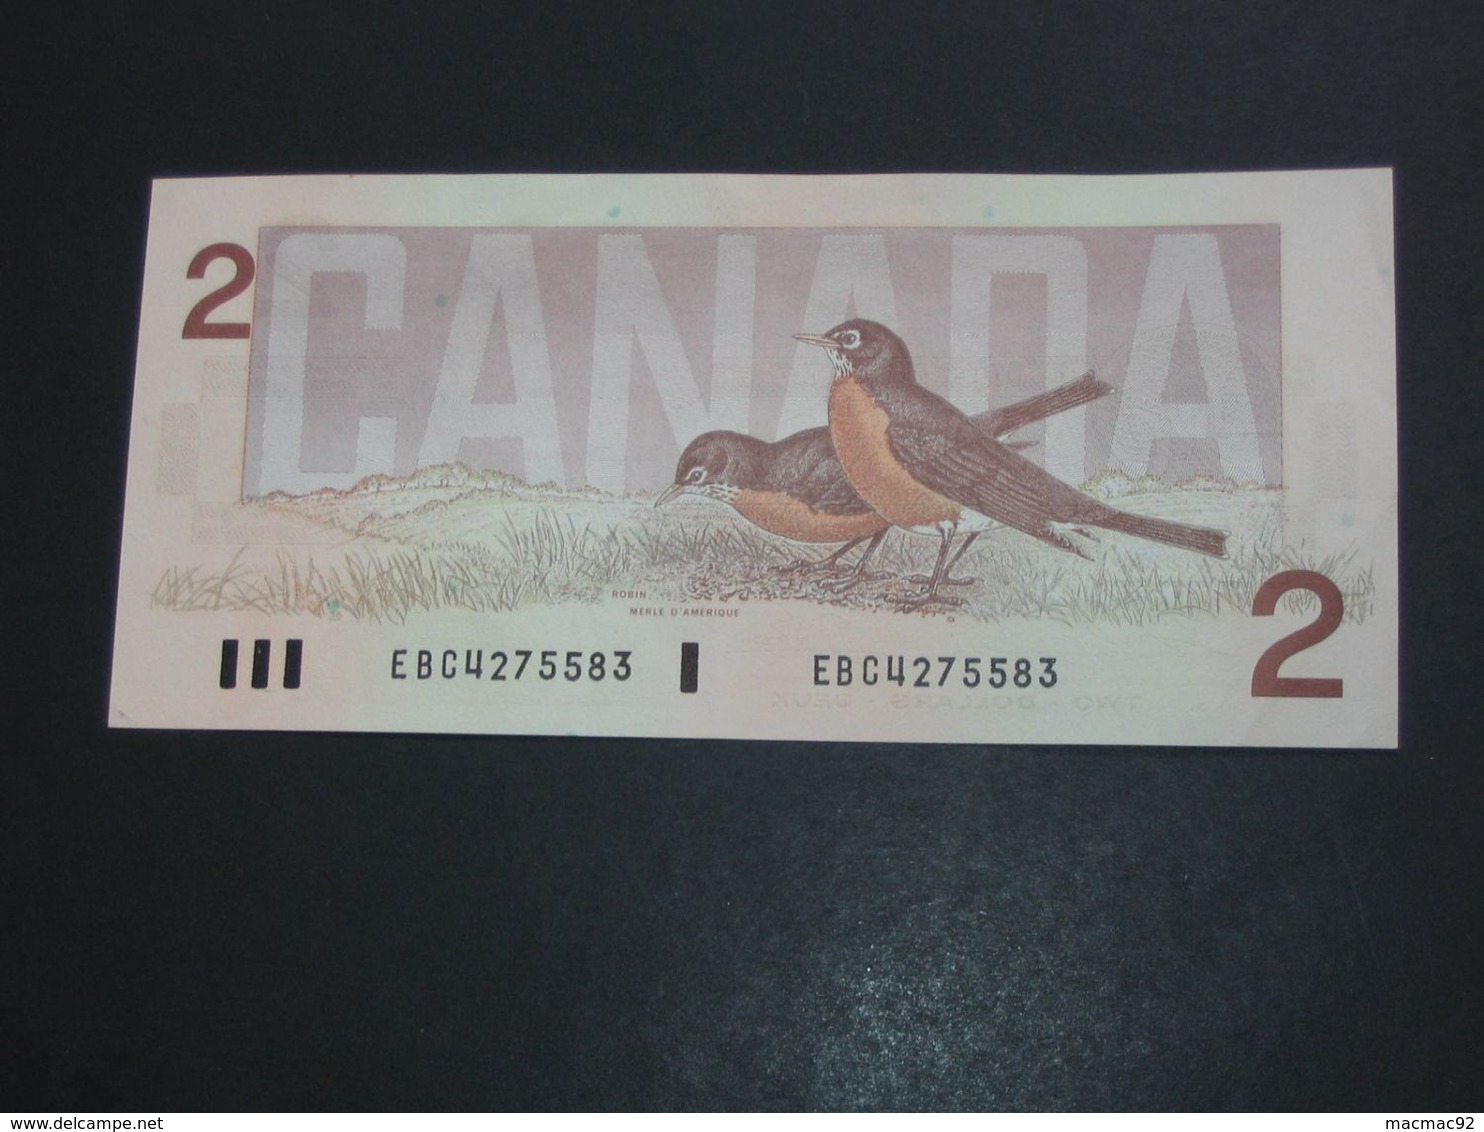 2 Dollars 1986  - Bank Of Canada - Banque Du Canada **** EN ACHAT IMMEDIAT ****  Billet Presque Neuf !!!!! - Kanada